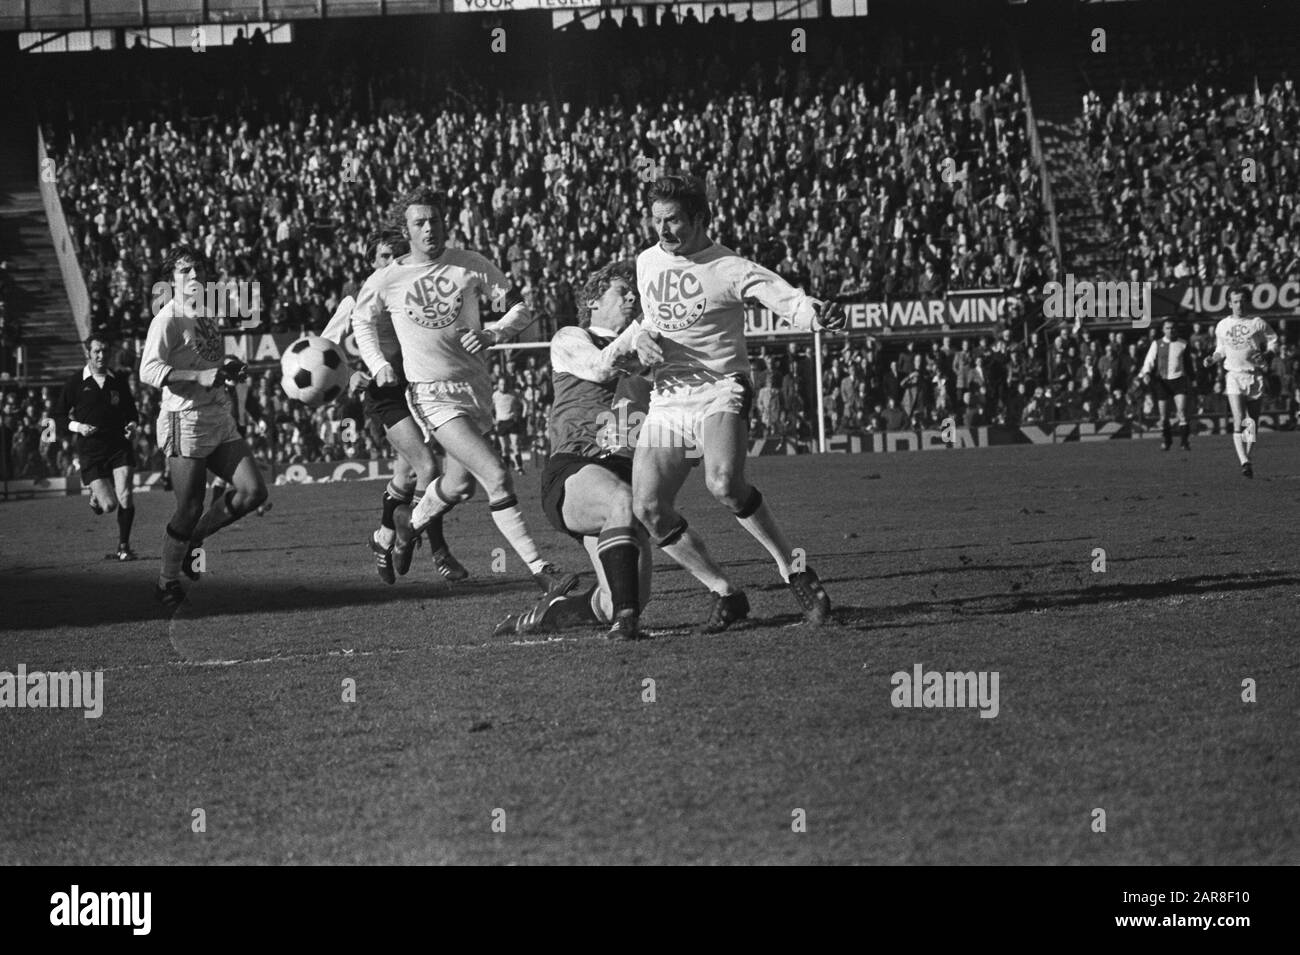 Feyenoord v NEC: 2-0  Game moment Date: 27 February 1977 Location: Rotterdam, Zuid-Holland Keywords: sport, football, footballers Stock Photo